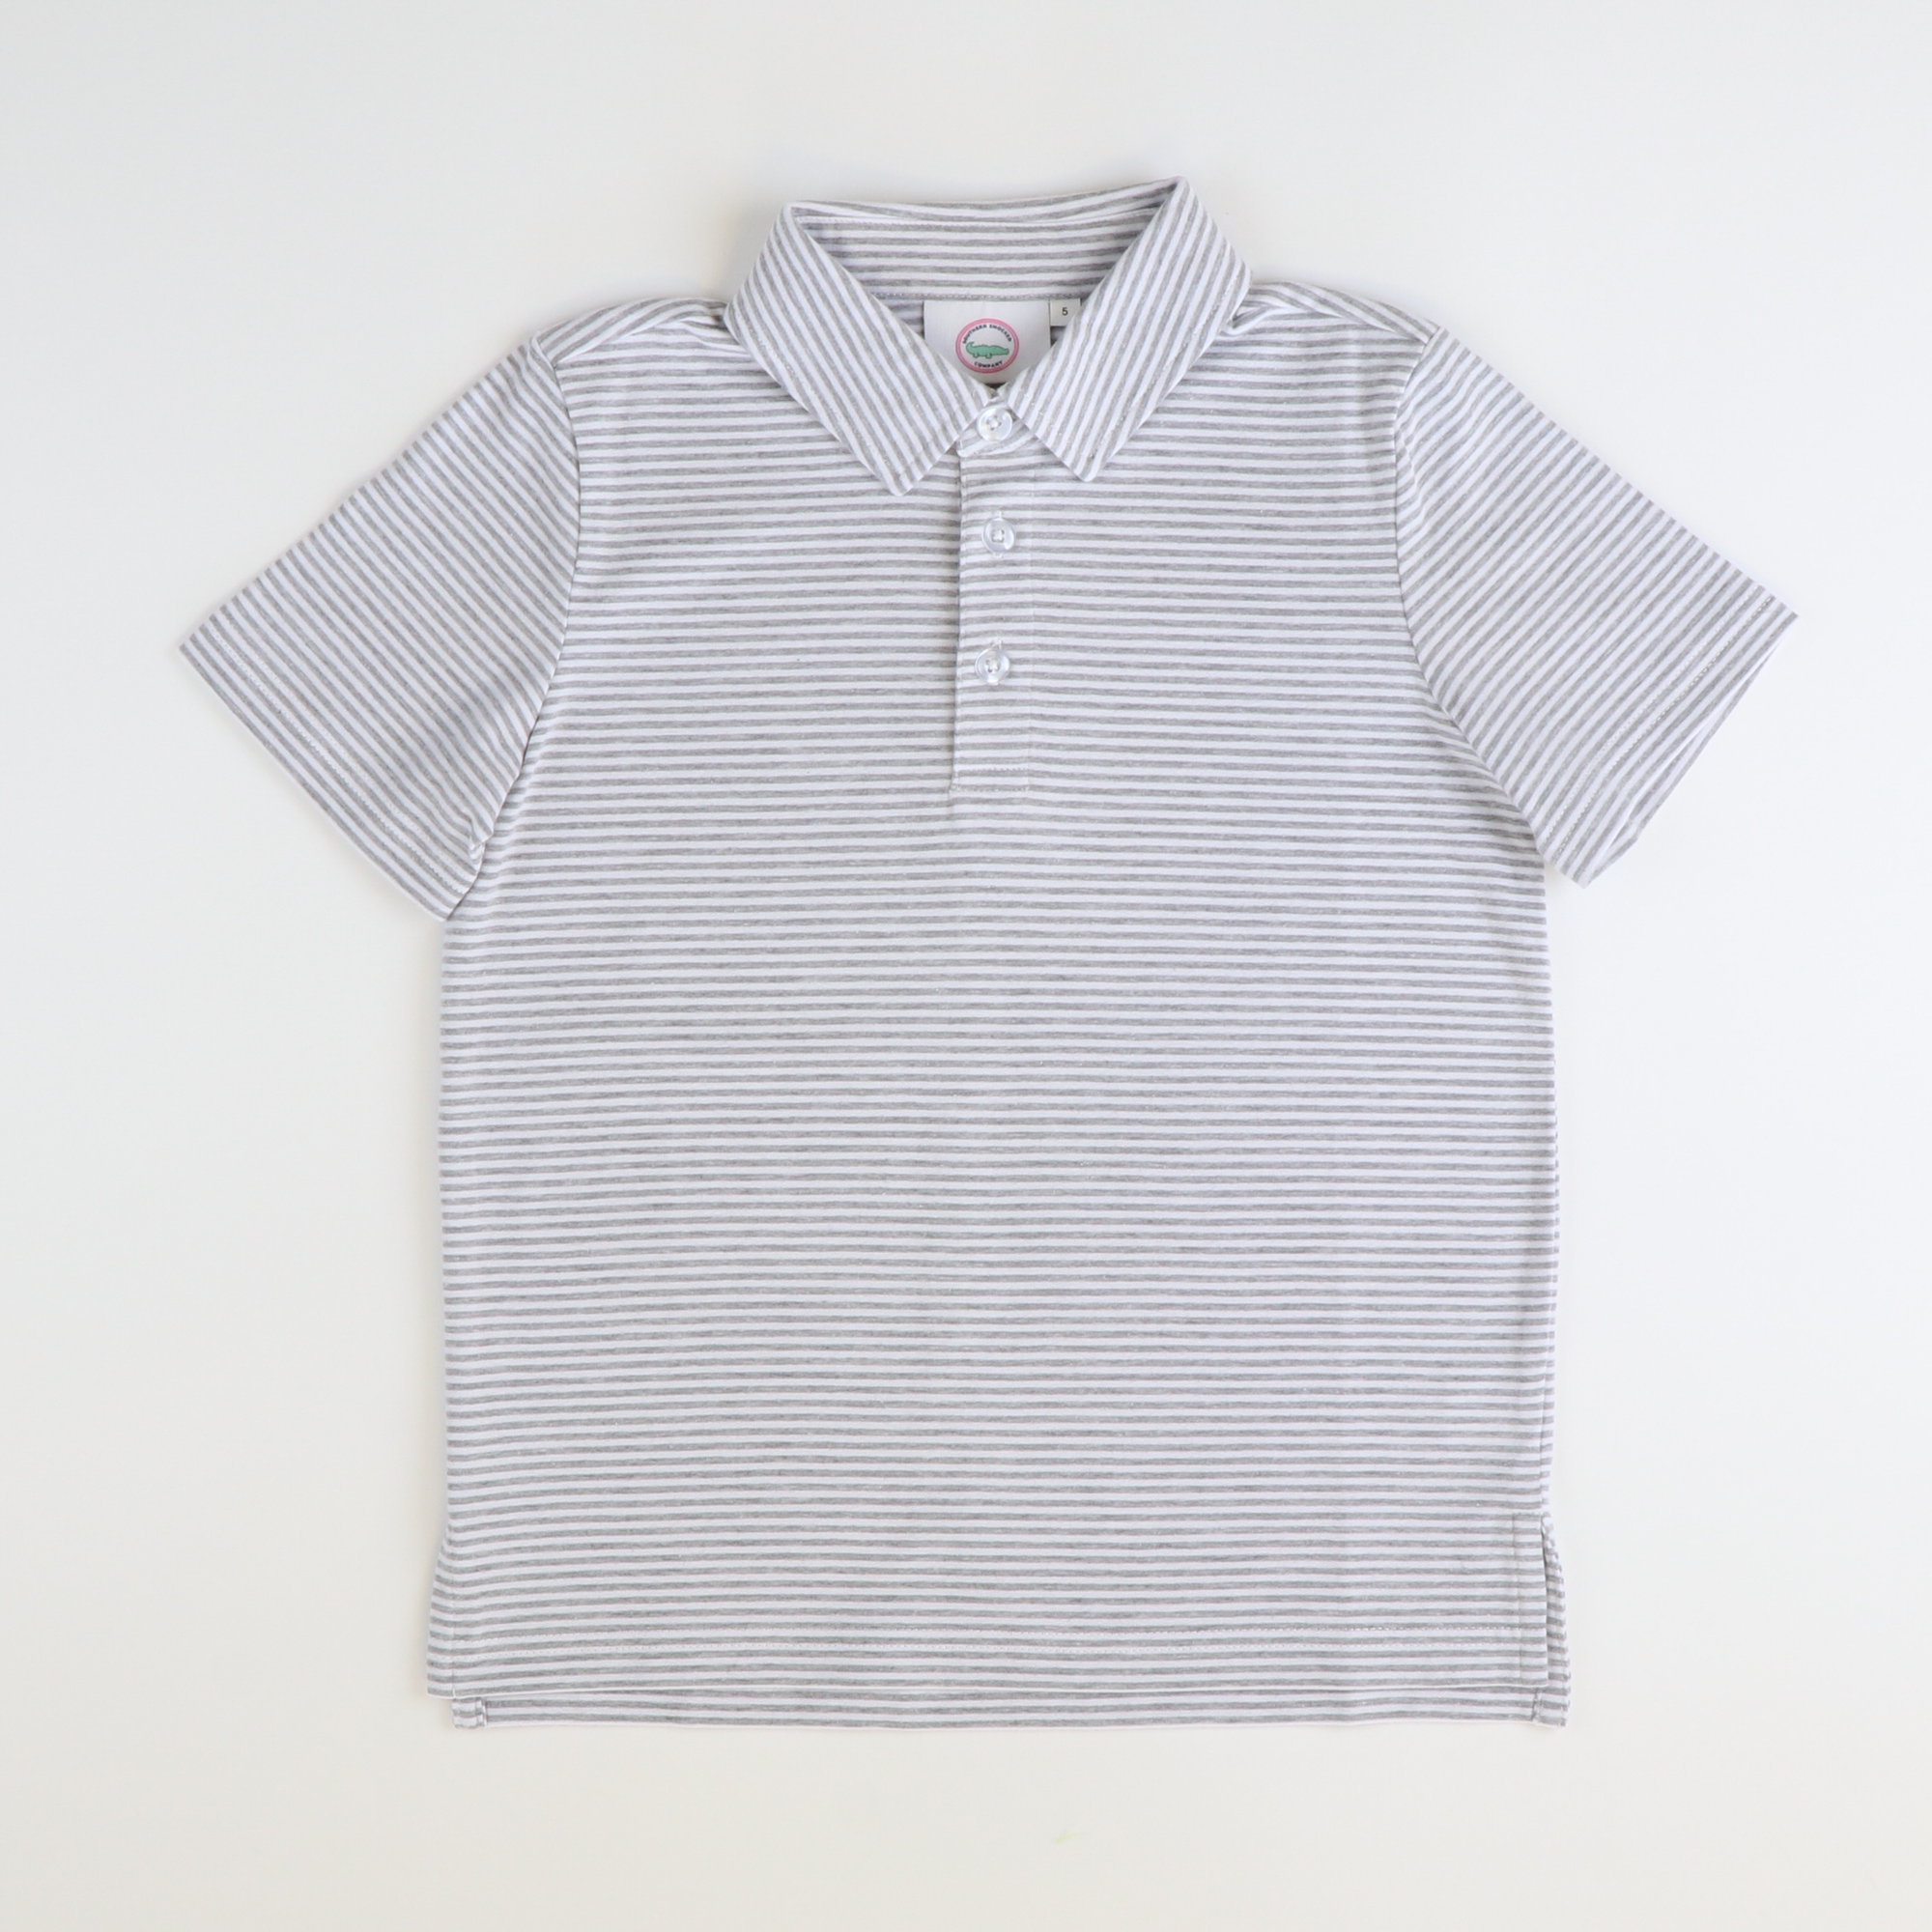 Boys Signature S/S Knit Polo - Gray & White Thin Stripe